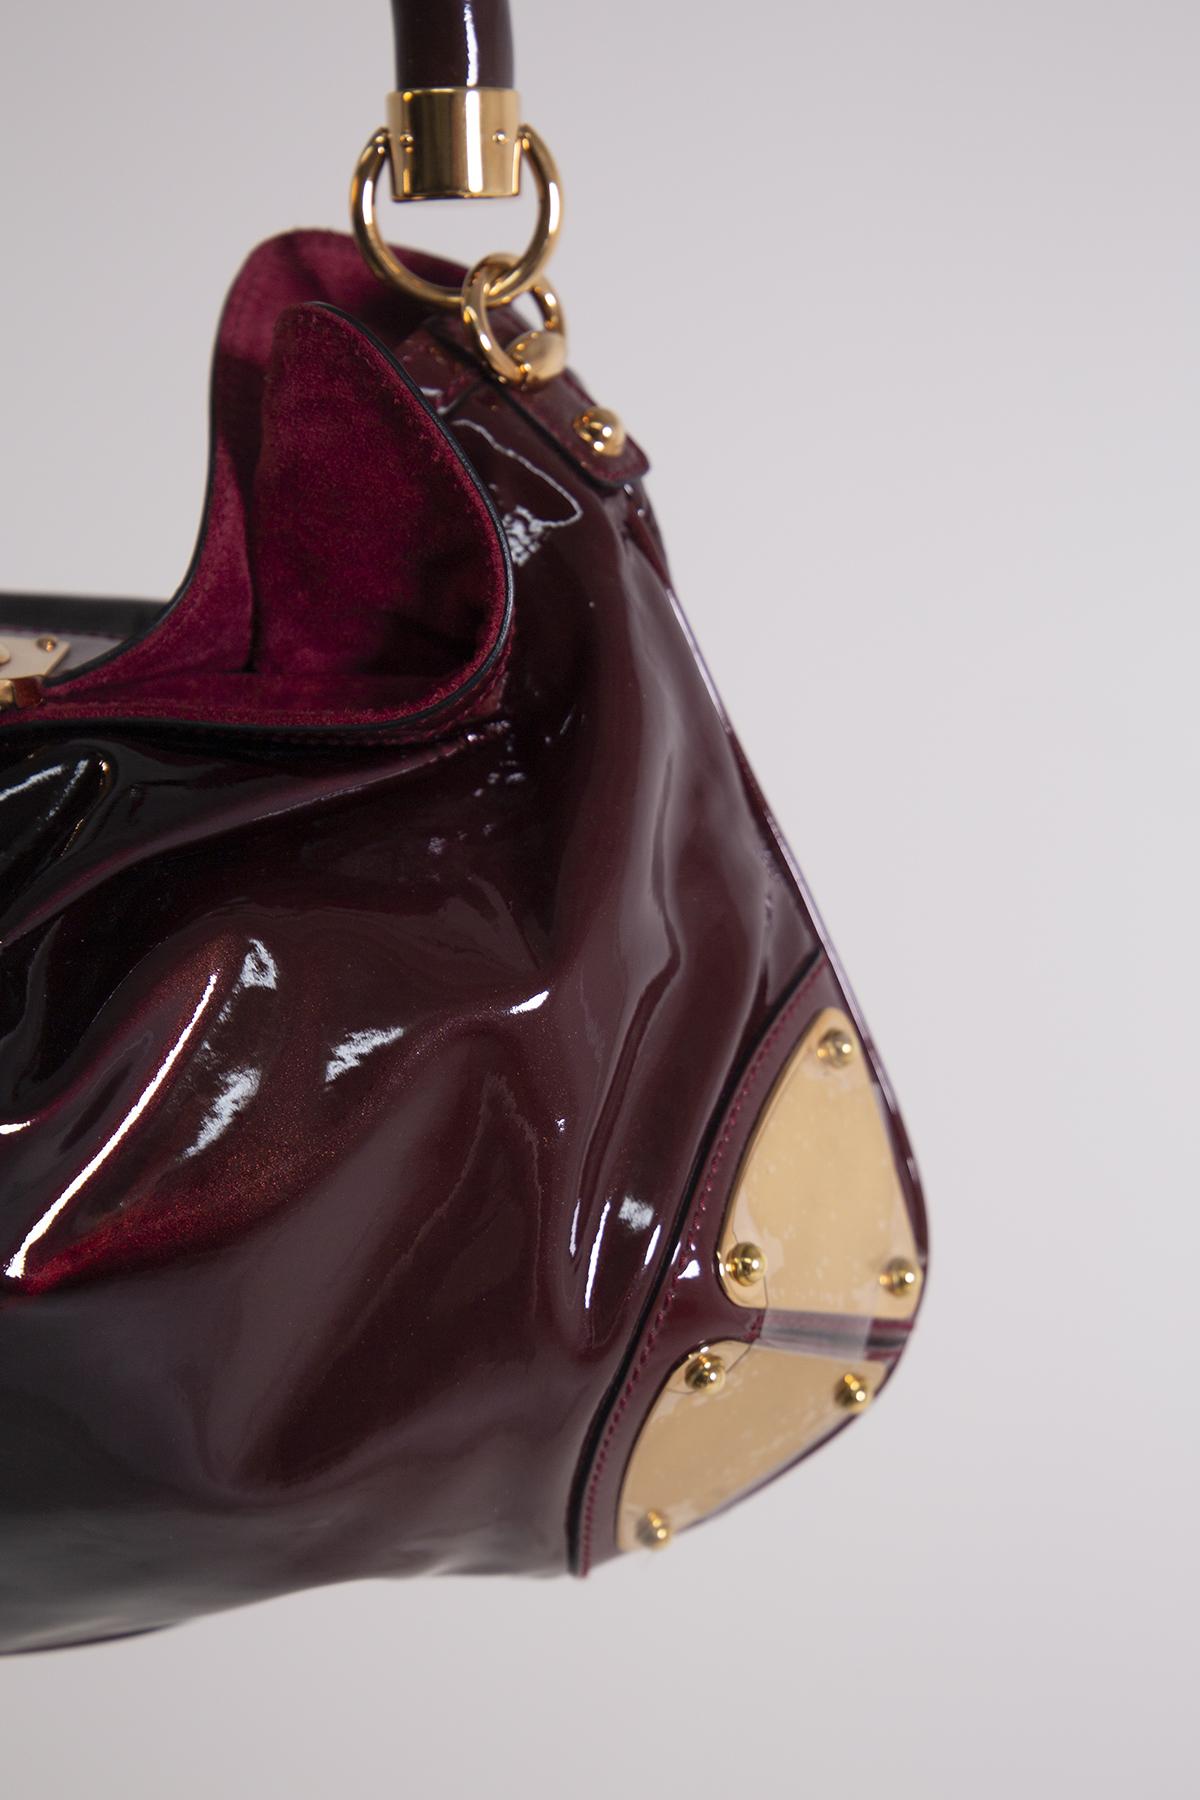 Black Gucci Indy Patent Leather Bordeaux Hobo Bag